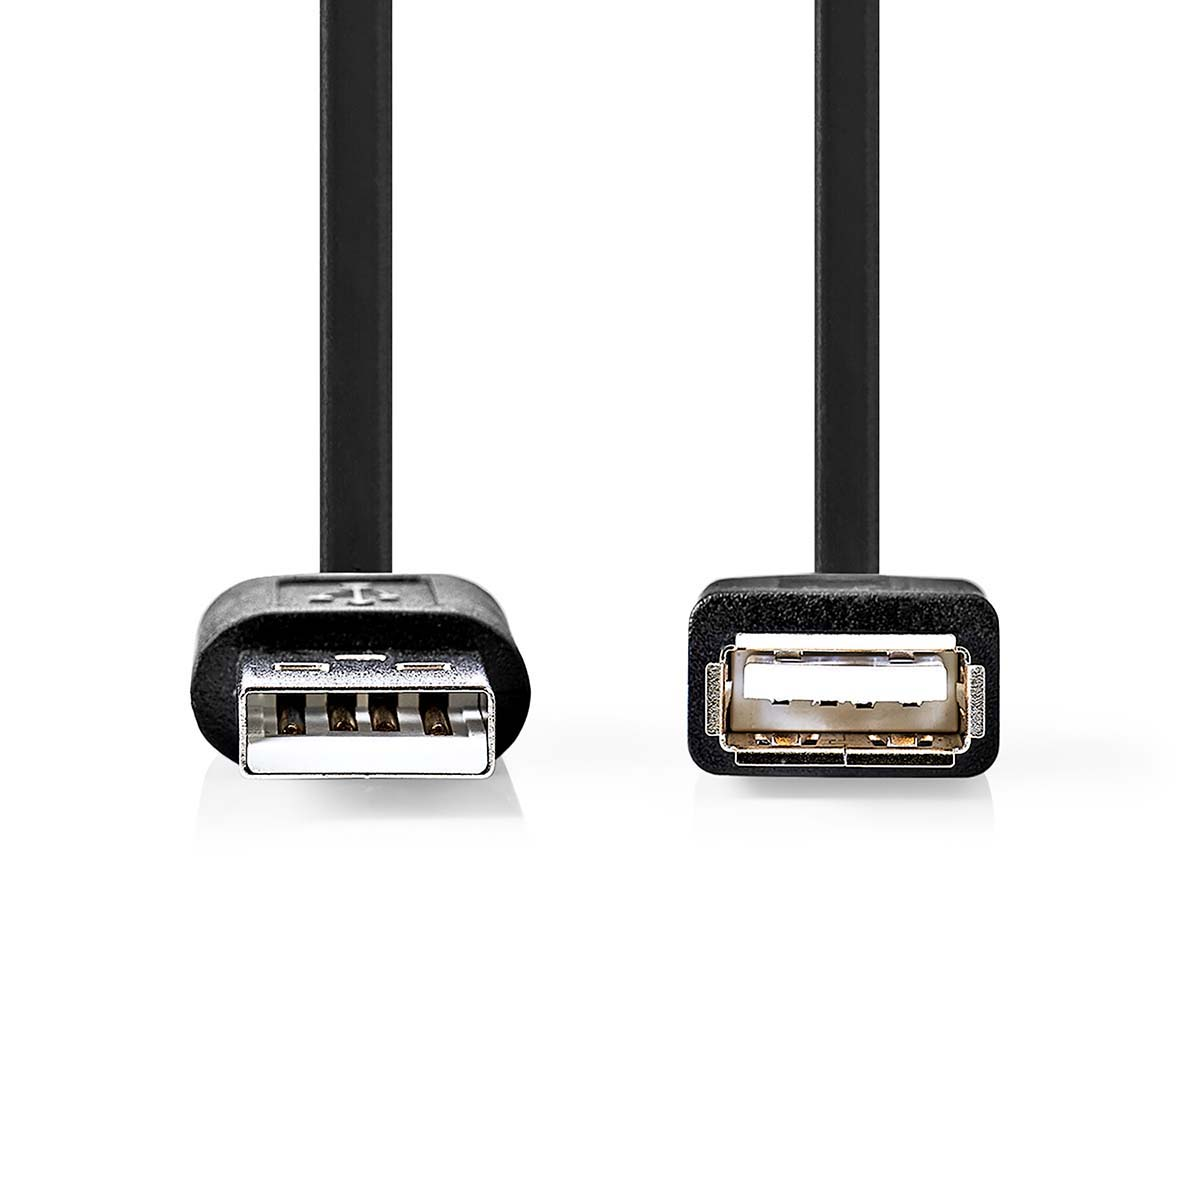 NEDIS CCGL60010BK10, USB-Kabel